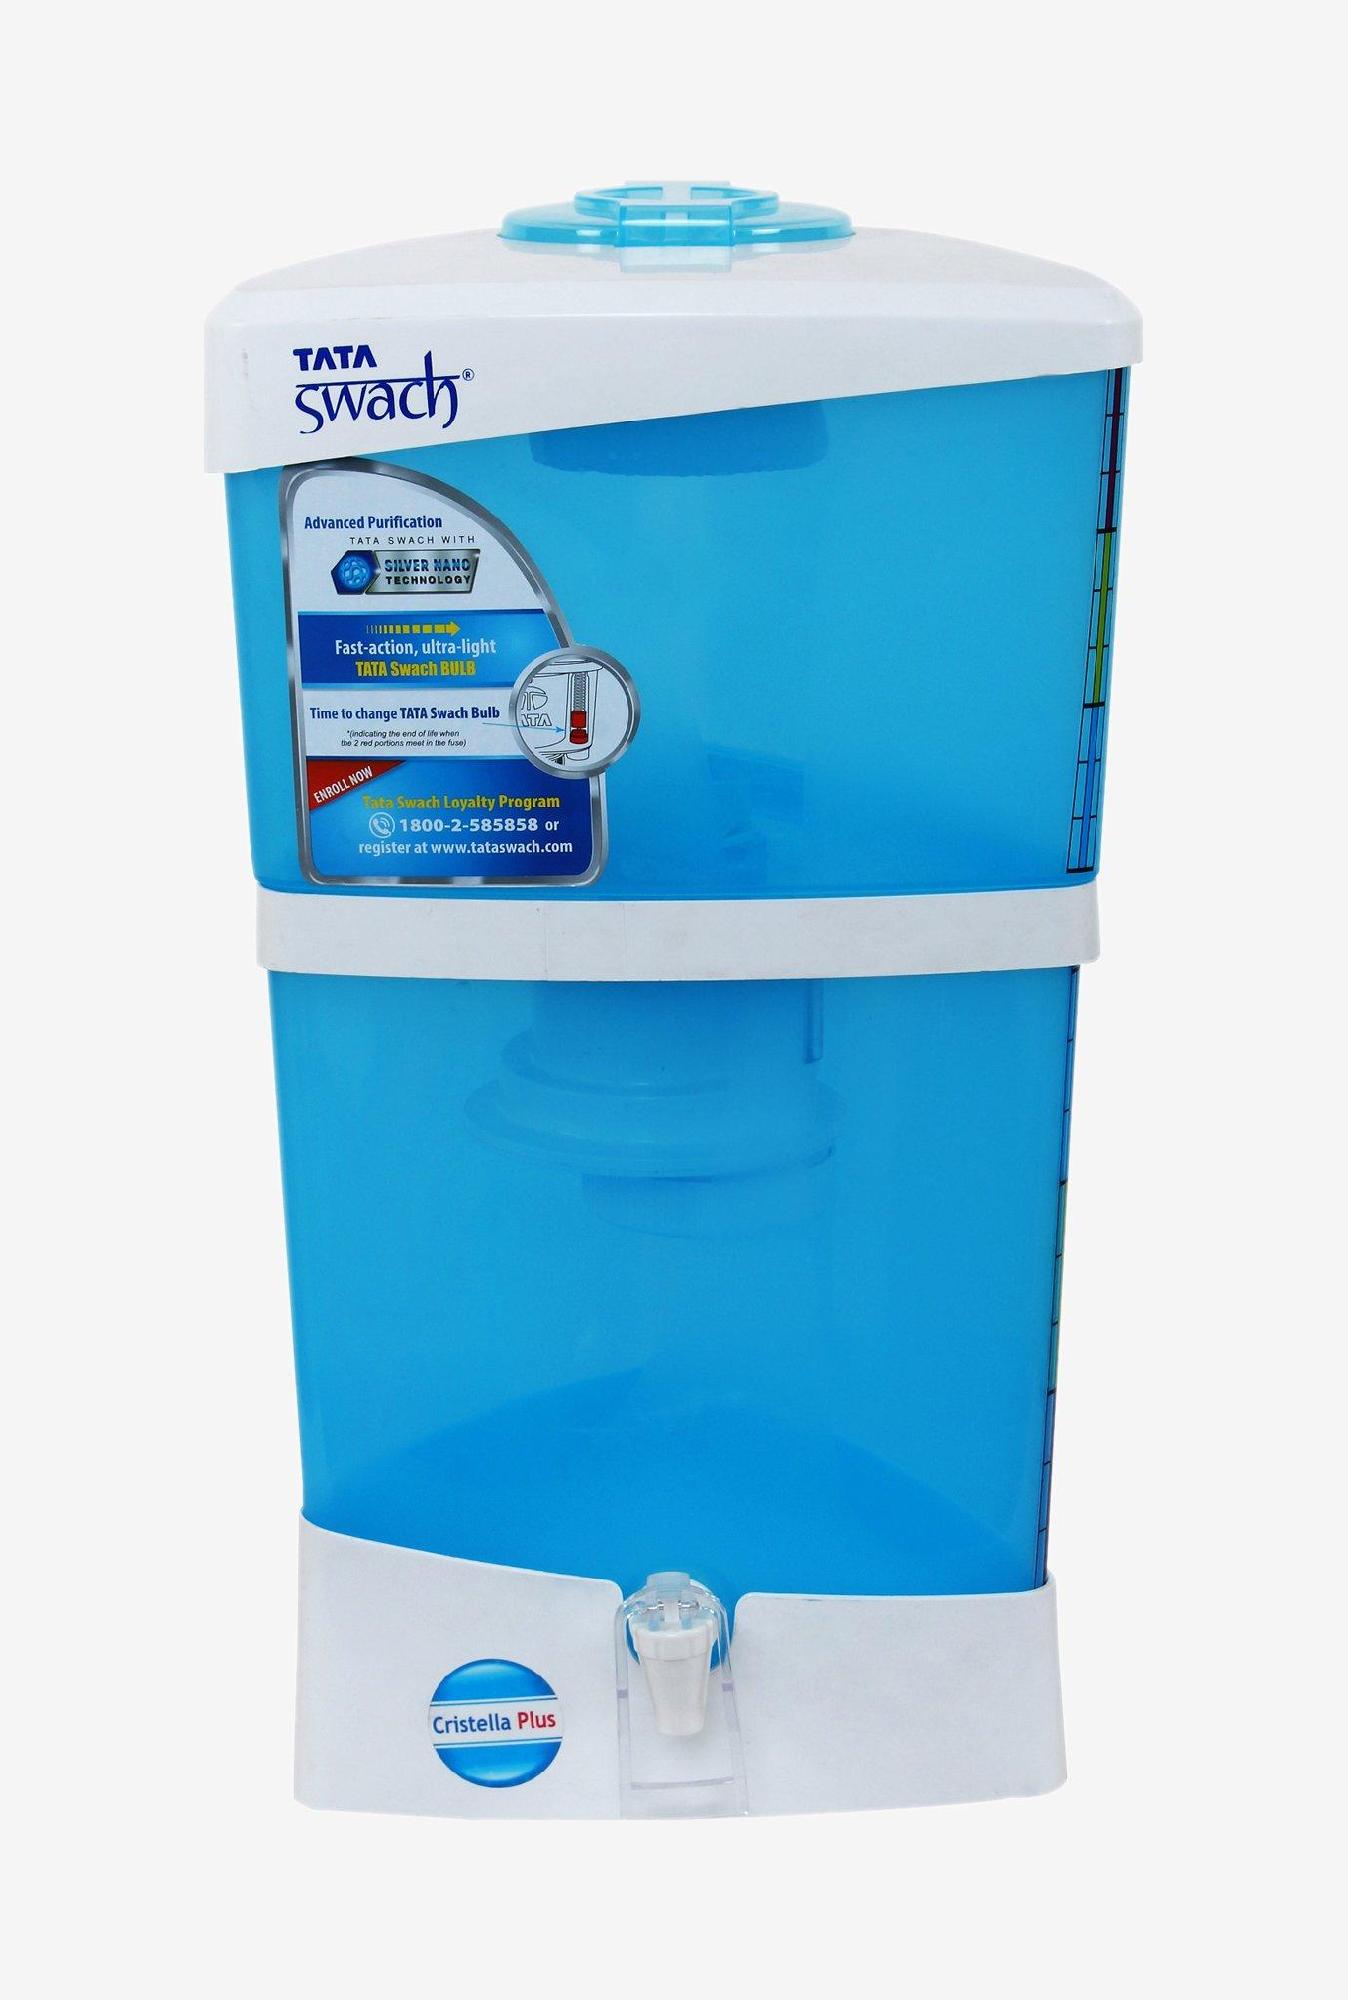 Tata Swach Cristella Plus 18L Water Purifier